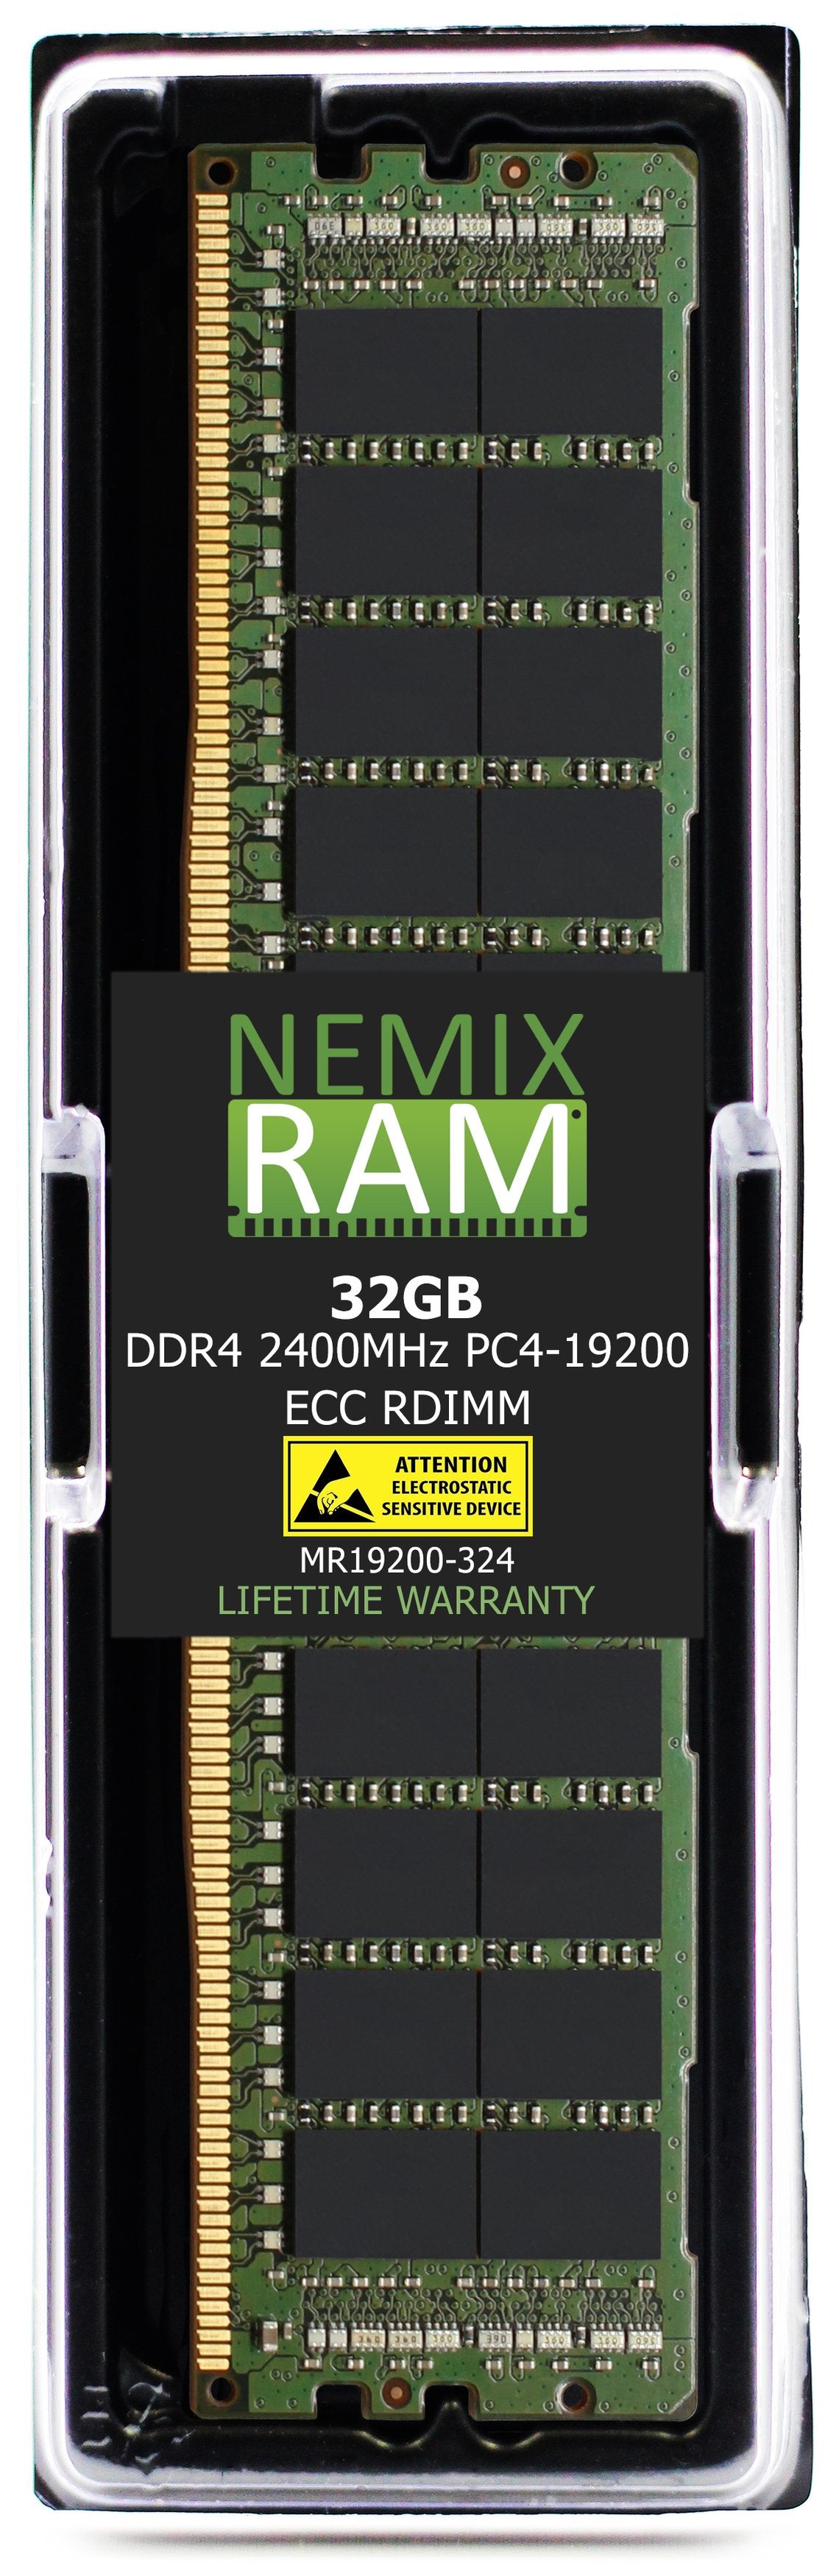 NEC Express5800 T120g Memory Module N8102-689F 32GB DDR4 2400MHZ PC4-19200 RDIMM